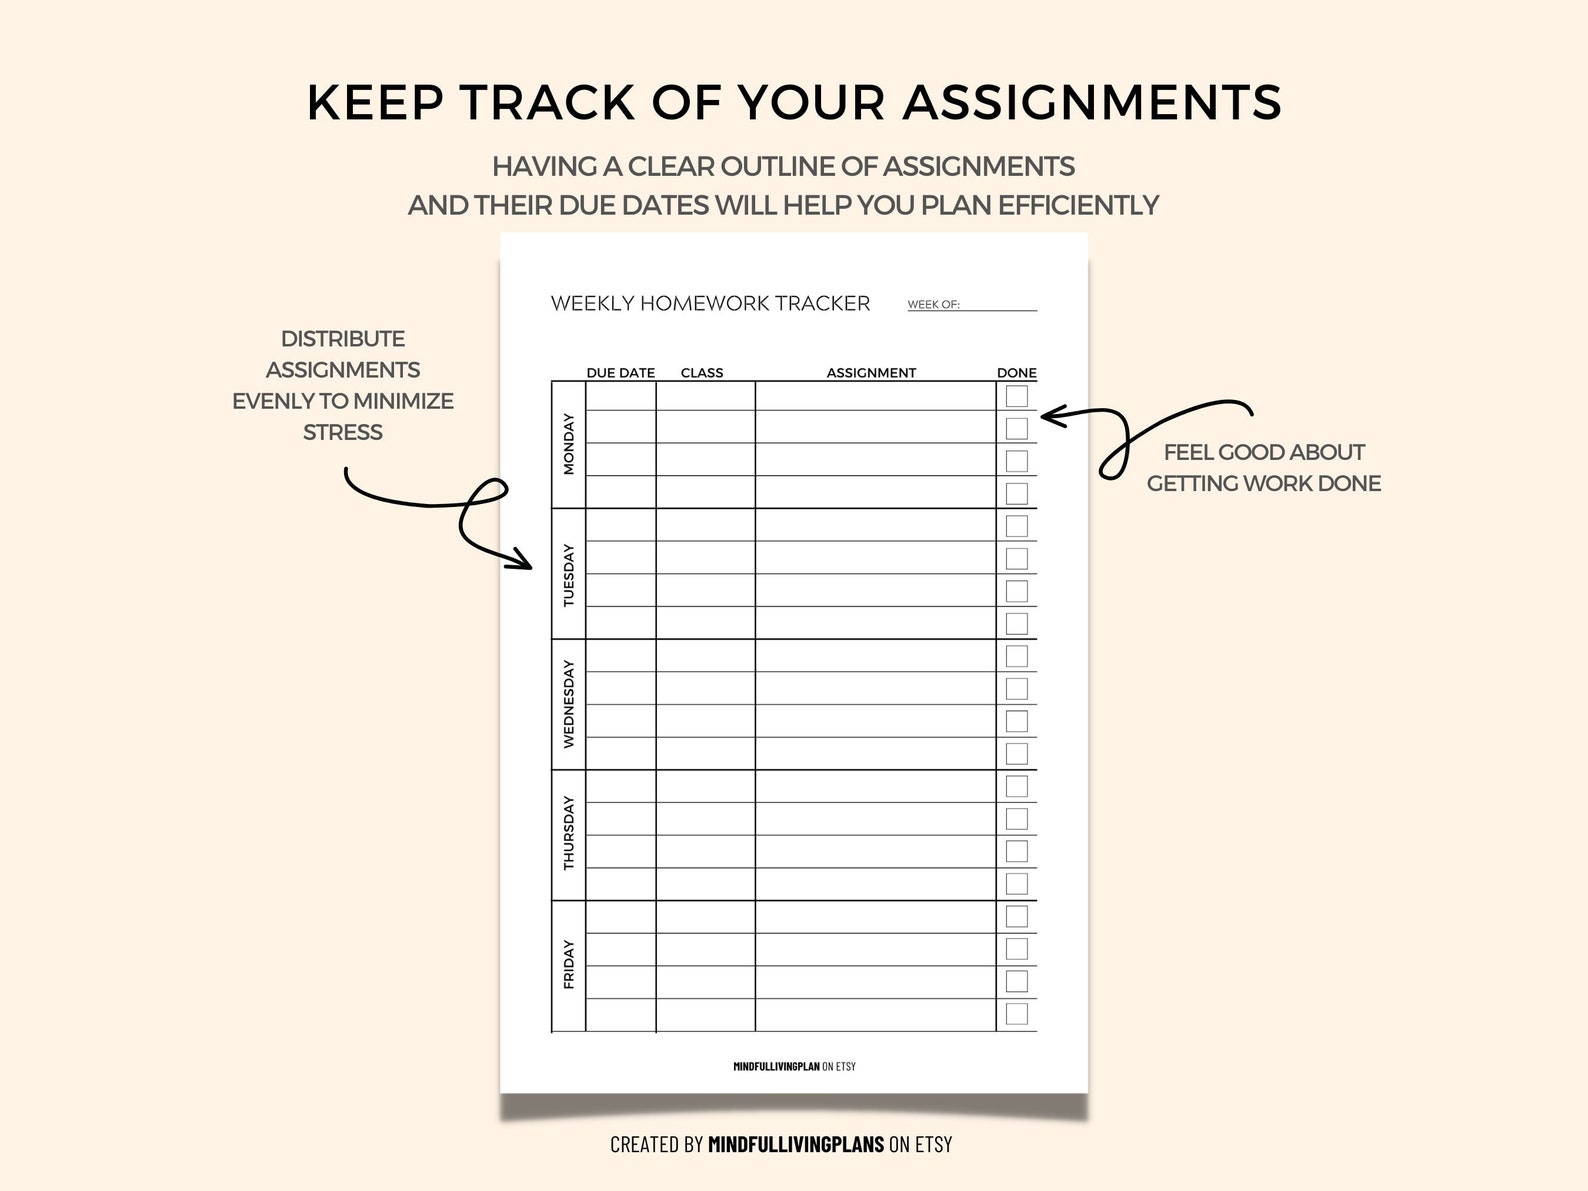 weekly homework tracker pdf